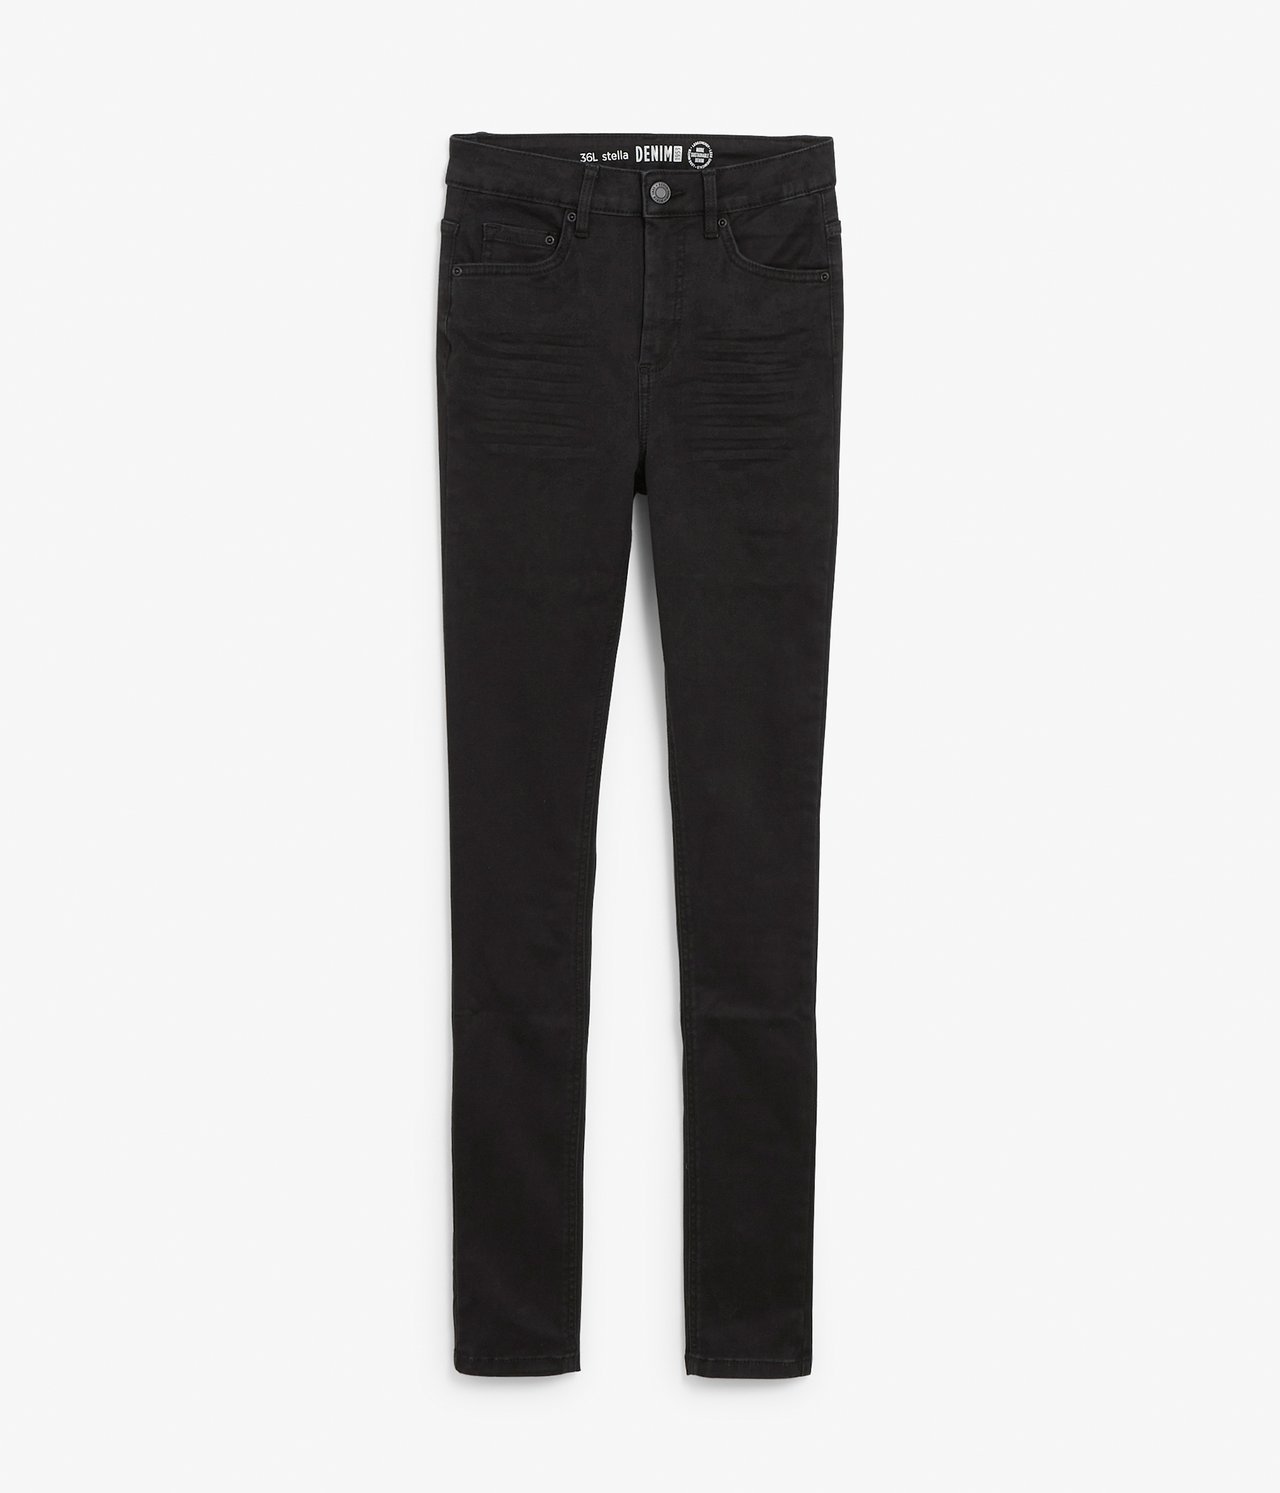 Super slim jeans extra long leg - Musta - 5